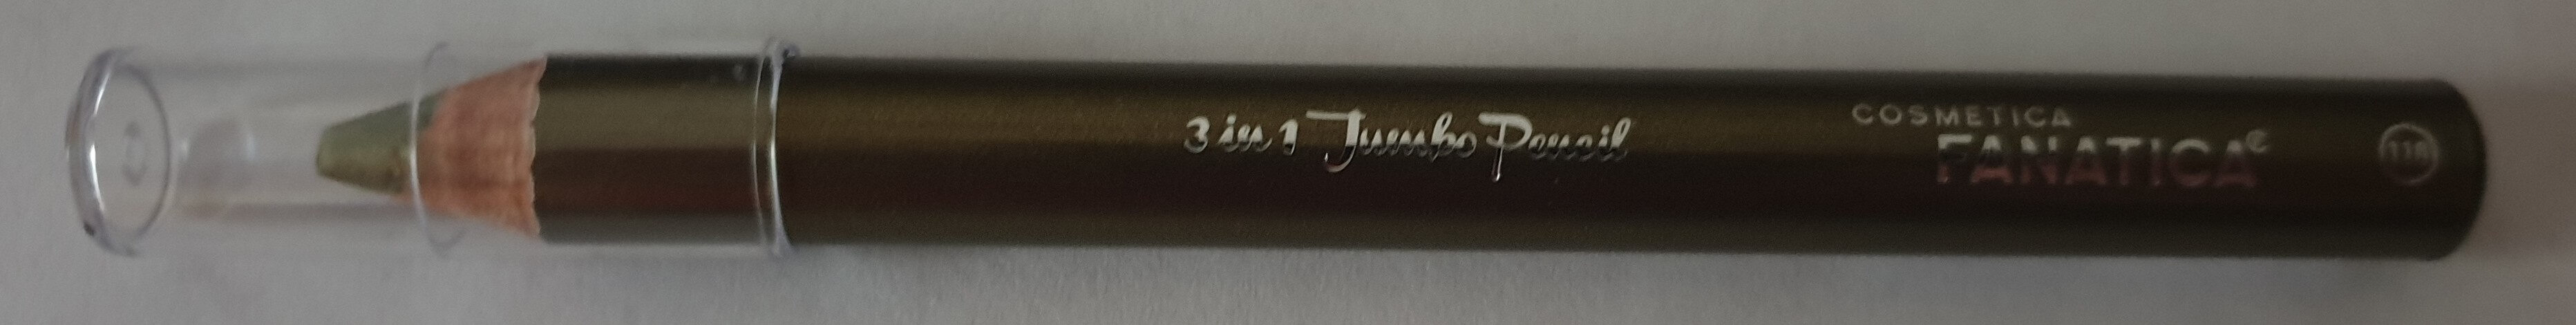 3 in 1 Jumbo Pencil - Produit - de